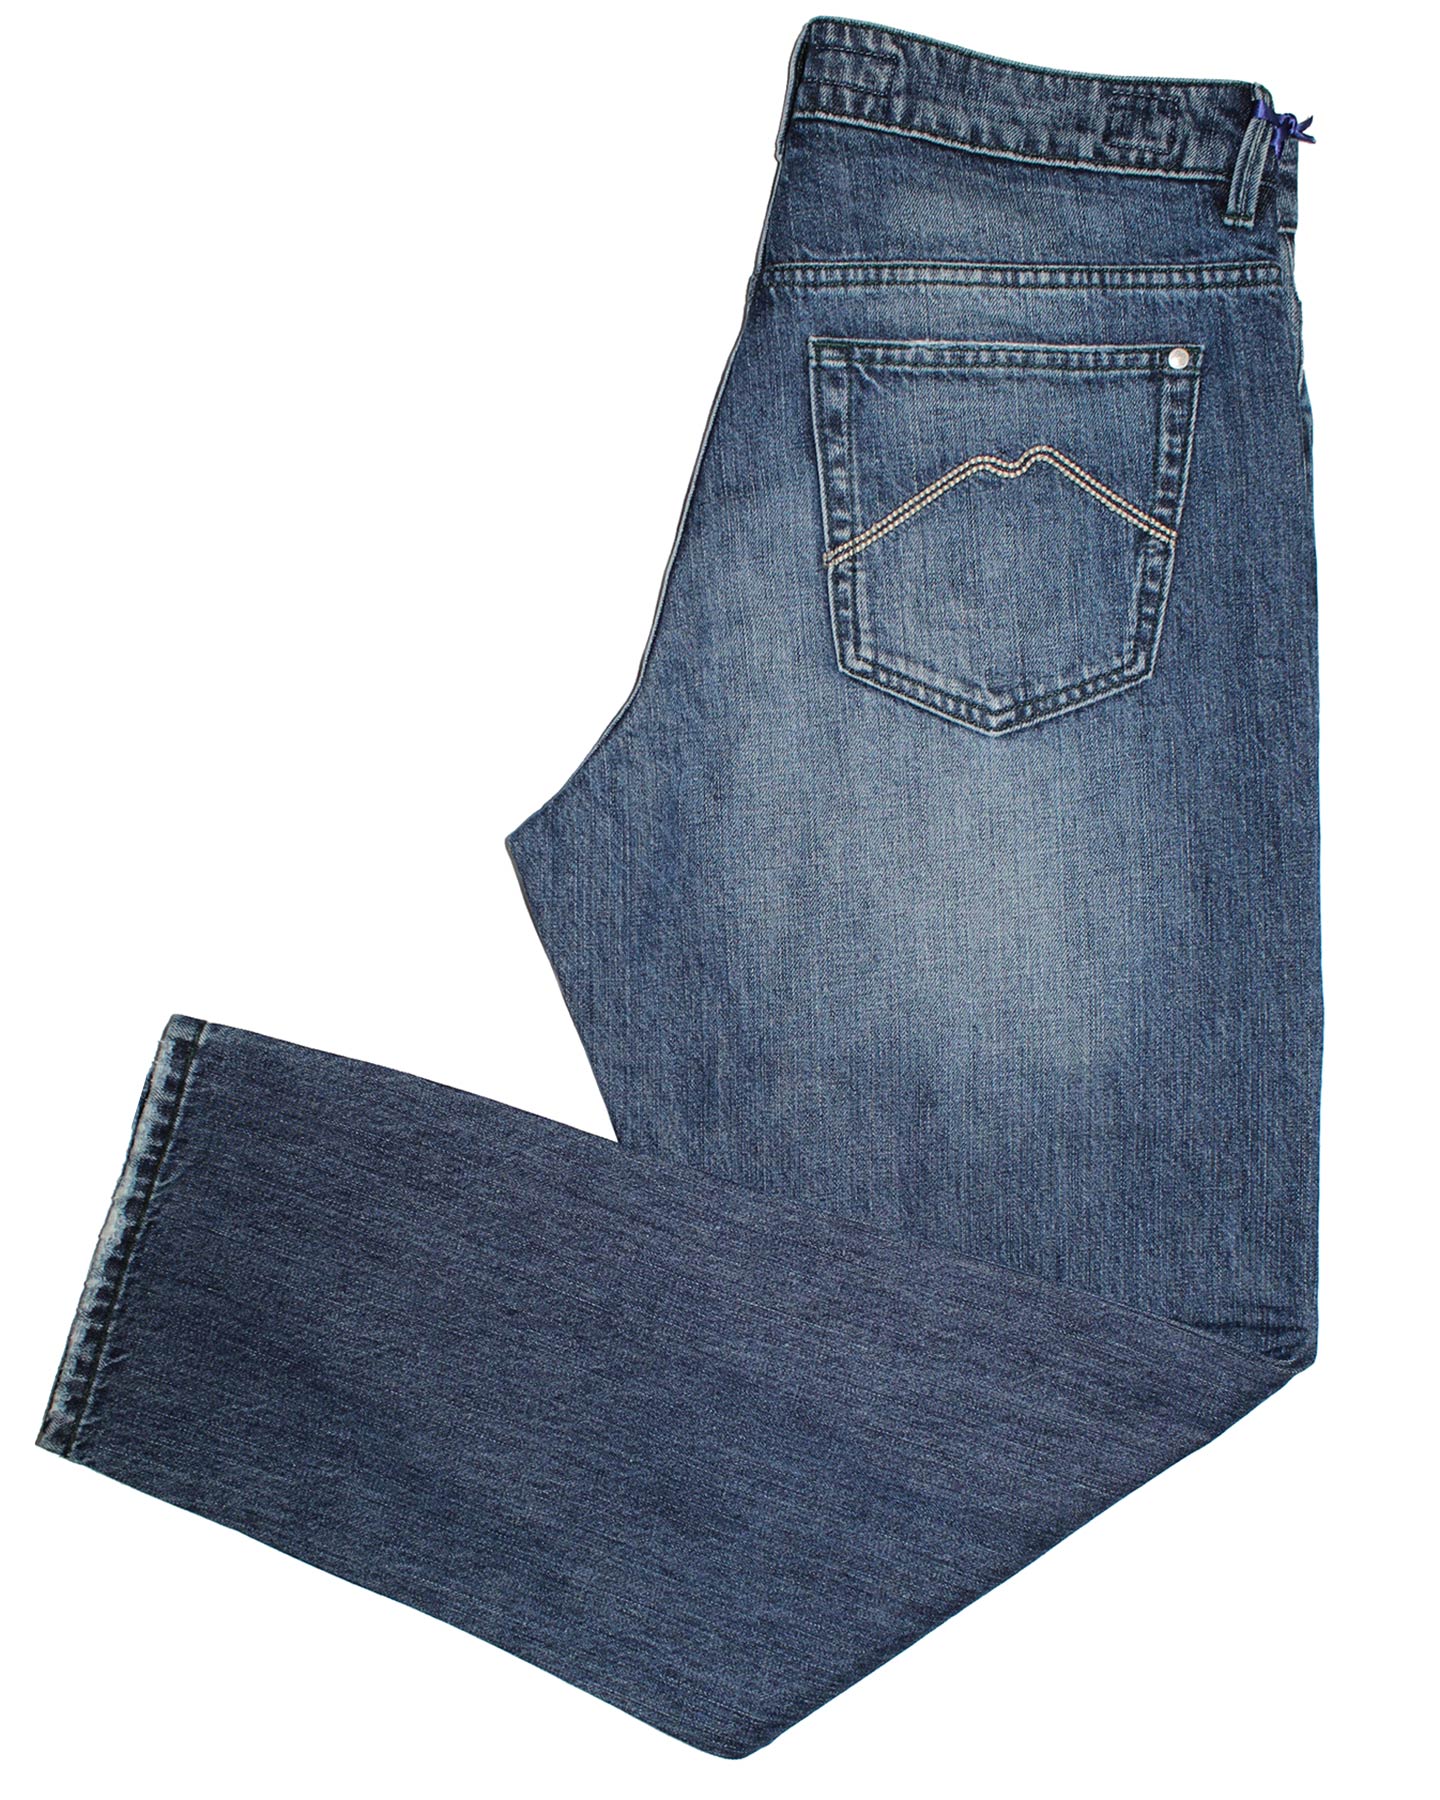 Italy Pants Dress & Jeans, Borrelli & Kiton